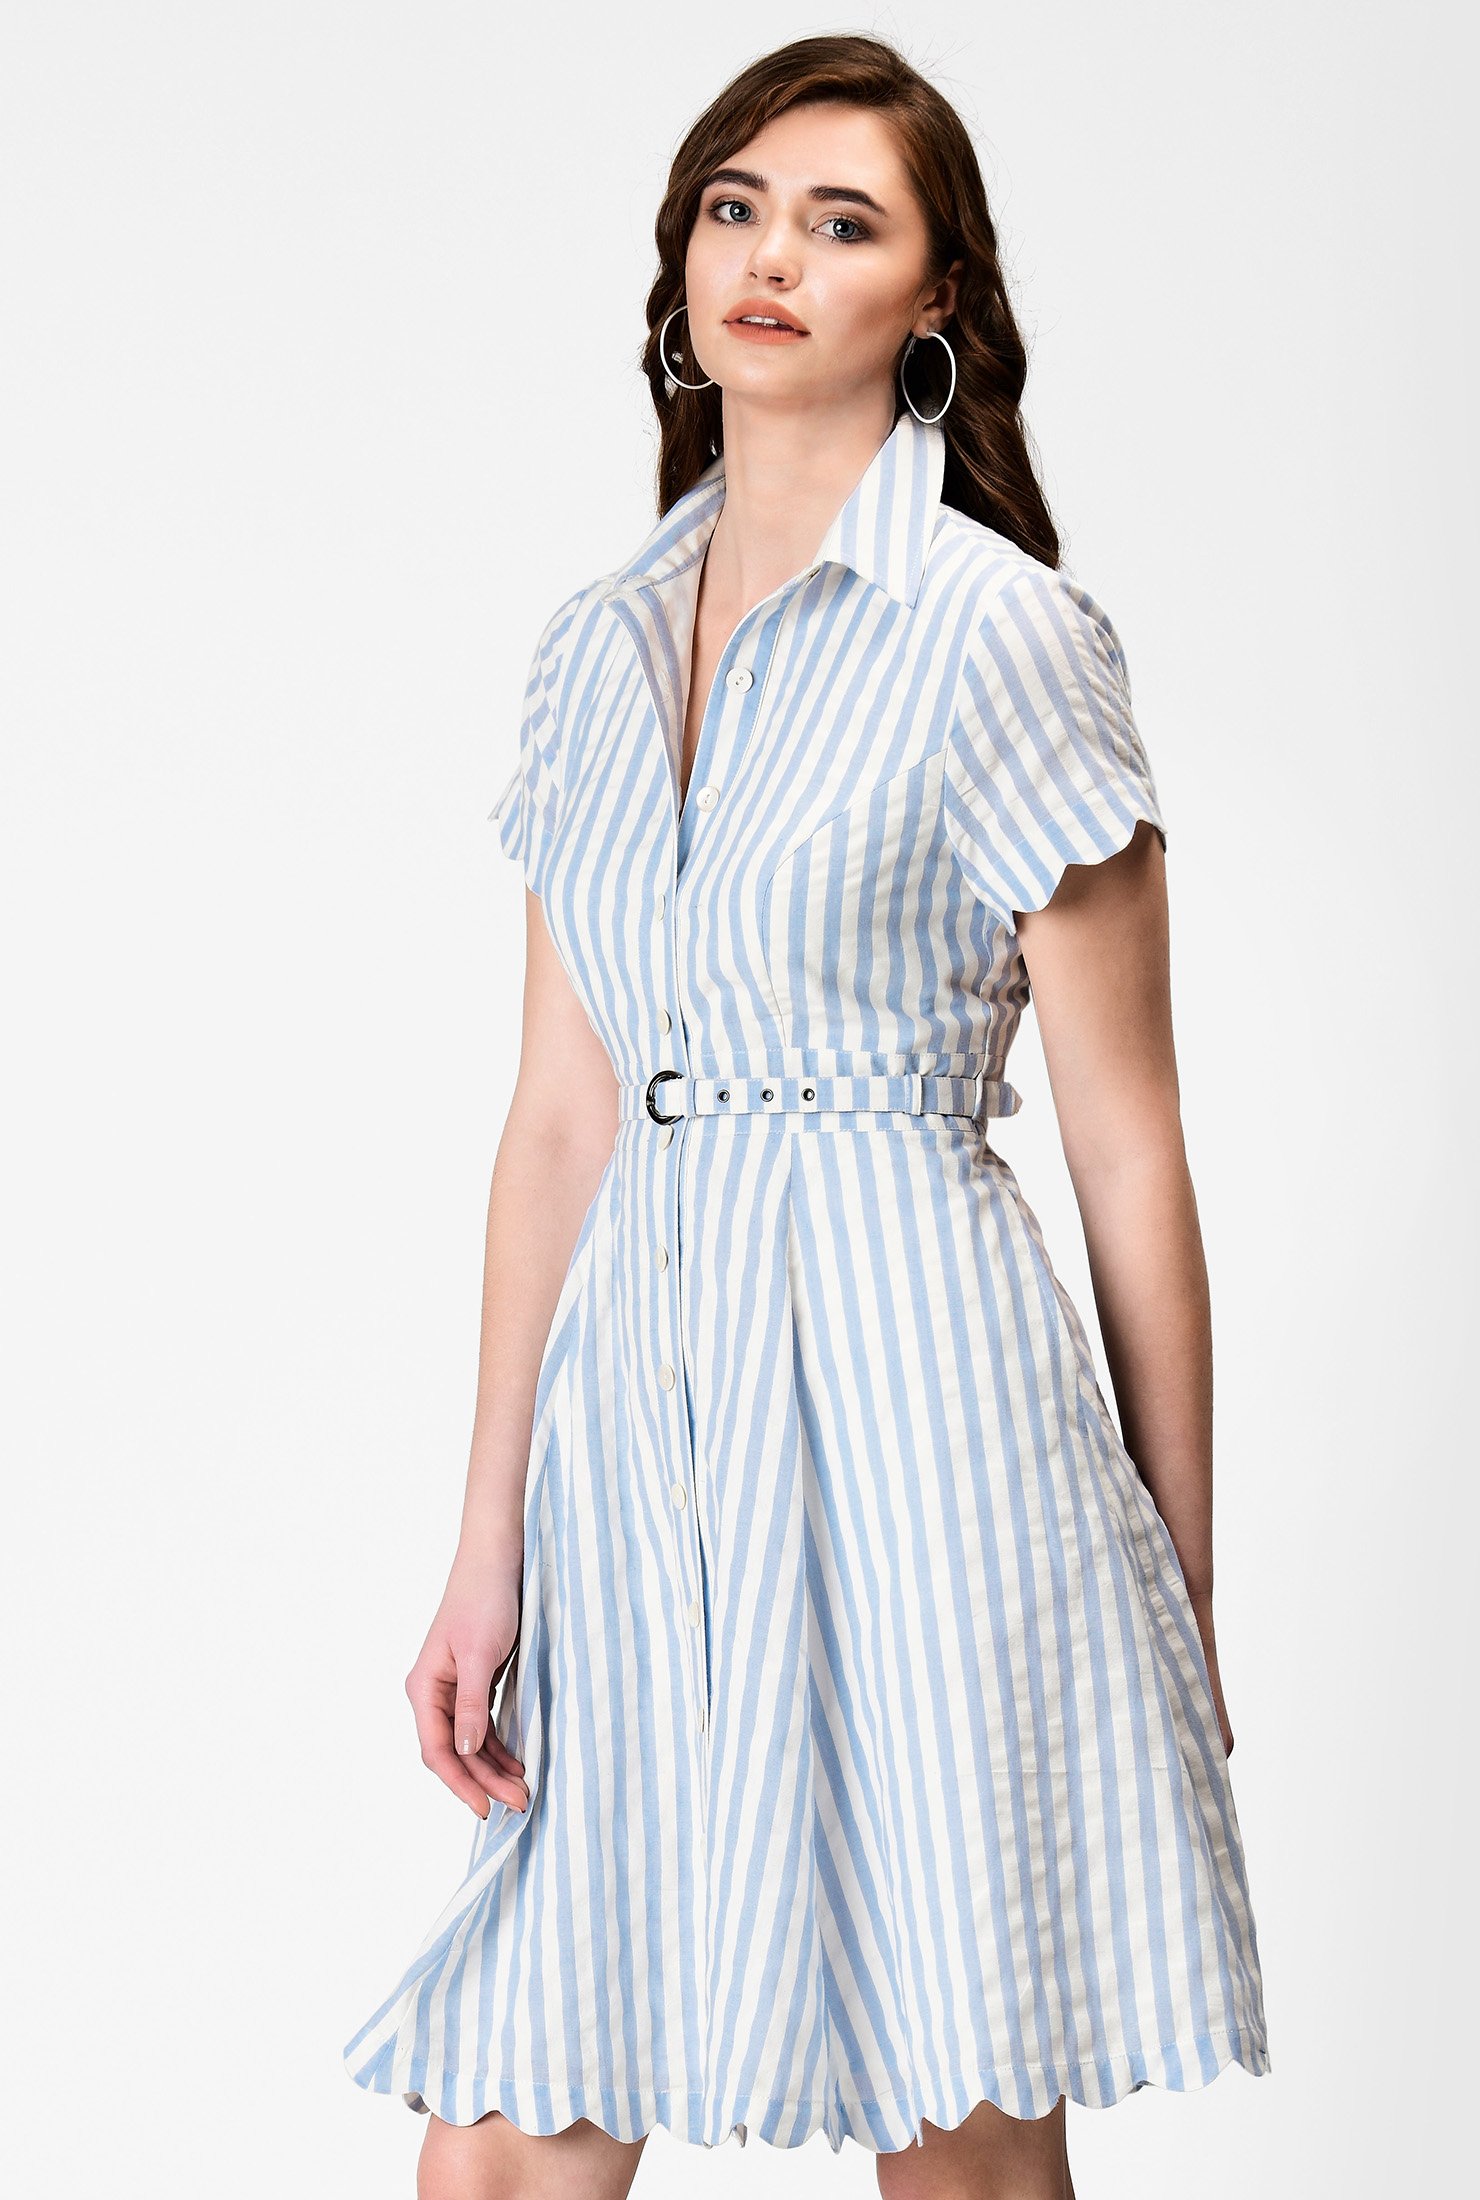 Shop Scallop trim seersucker stripe cotton shirtdress | eShakti